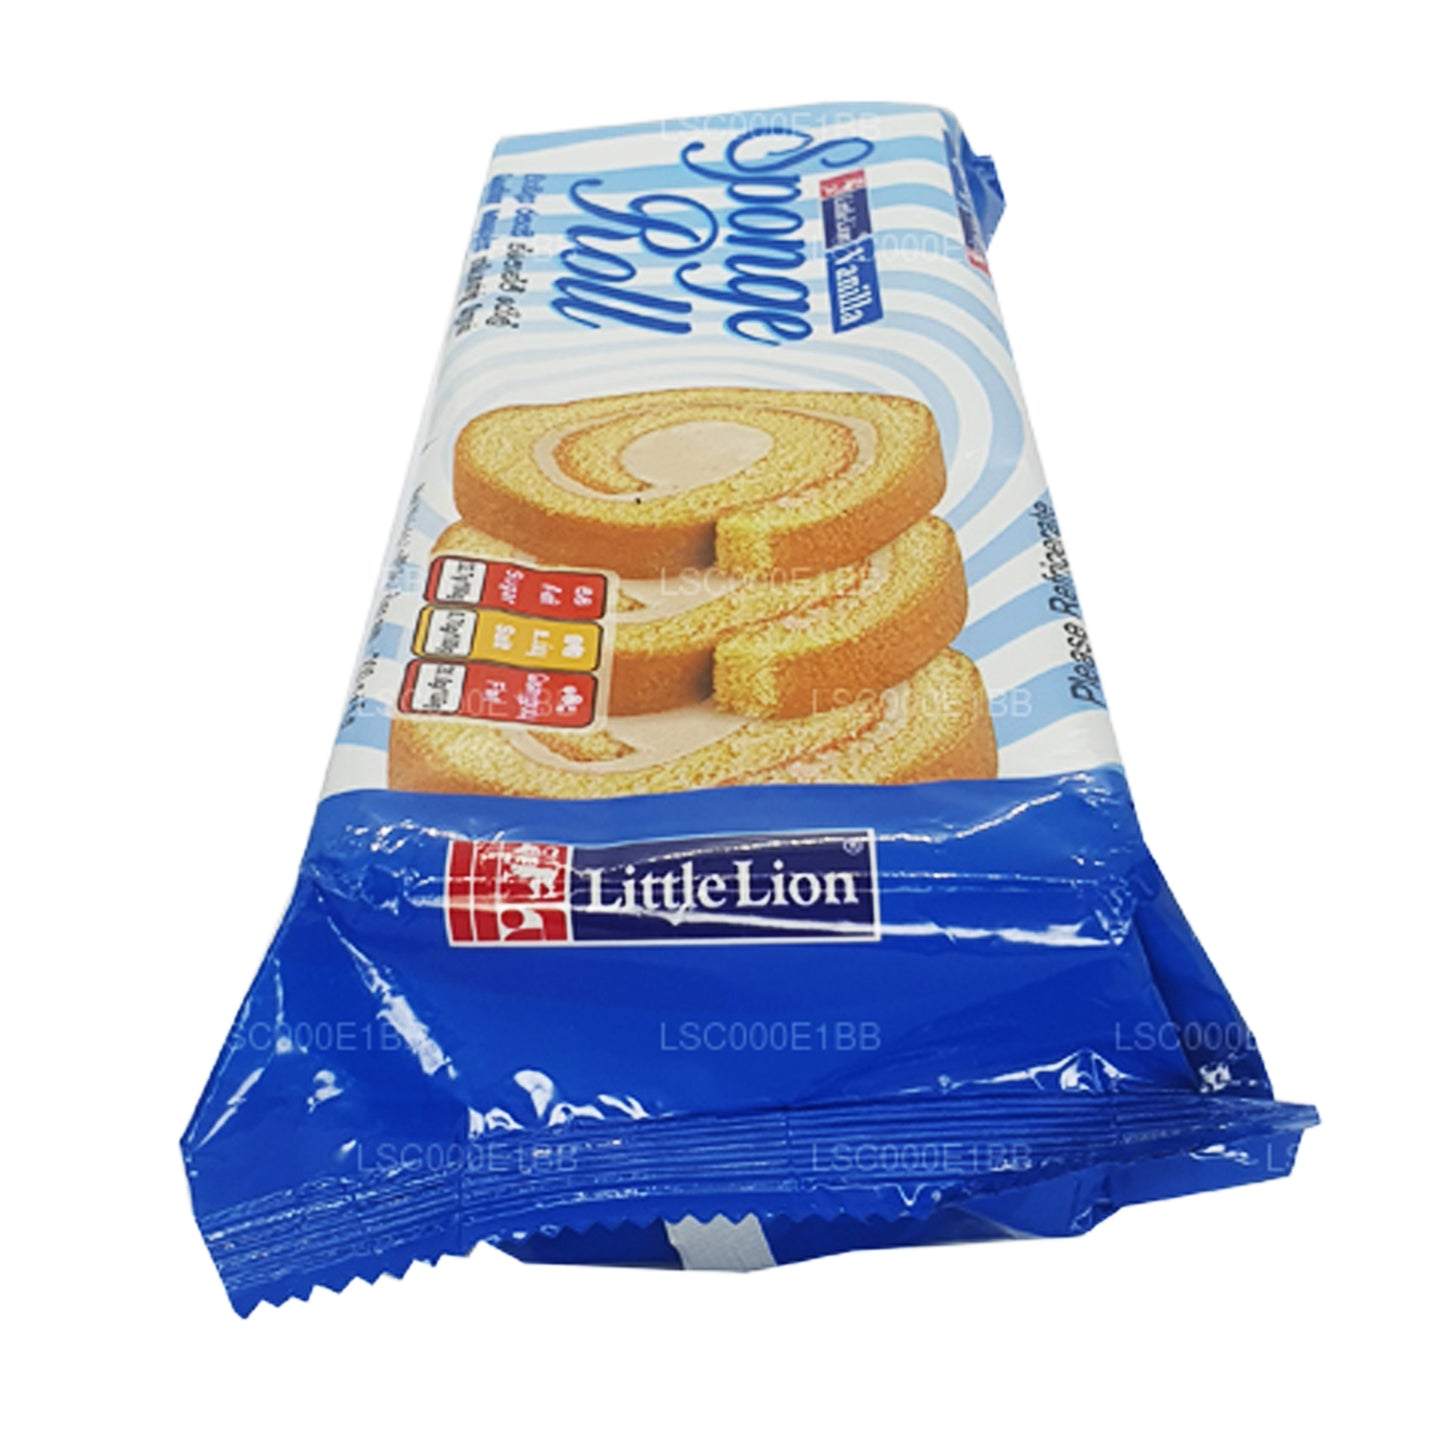 Little Lion Sponge Roll Vanilla (200g)